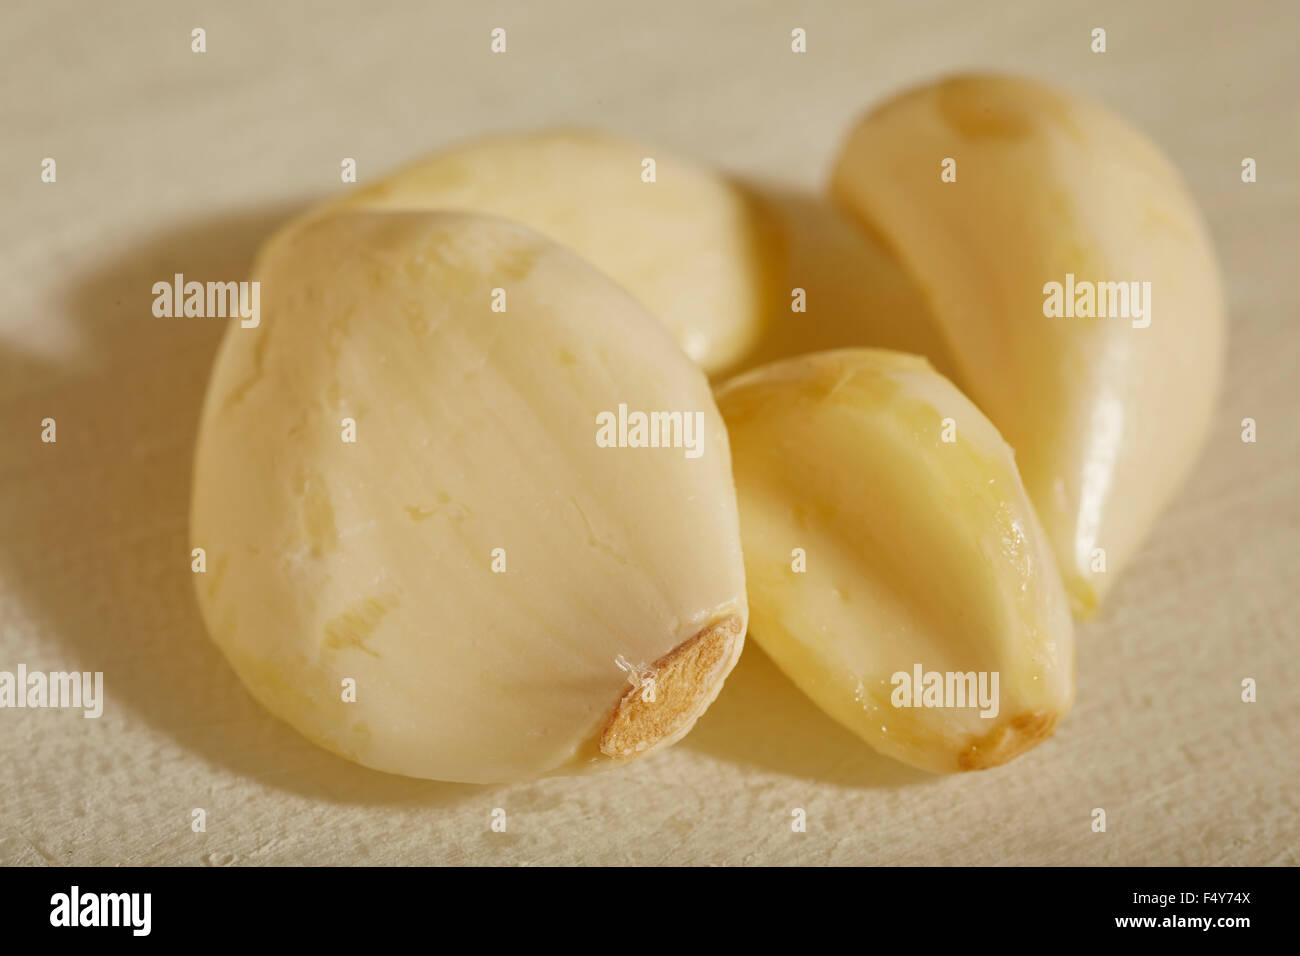 Cloves of whole garlic Stock Photo